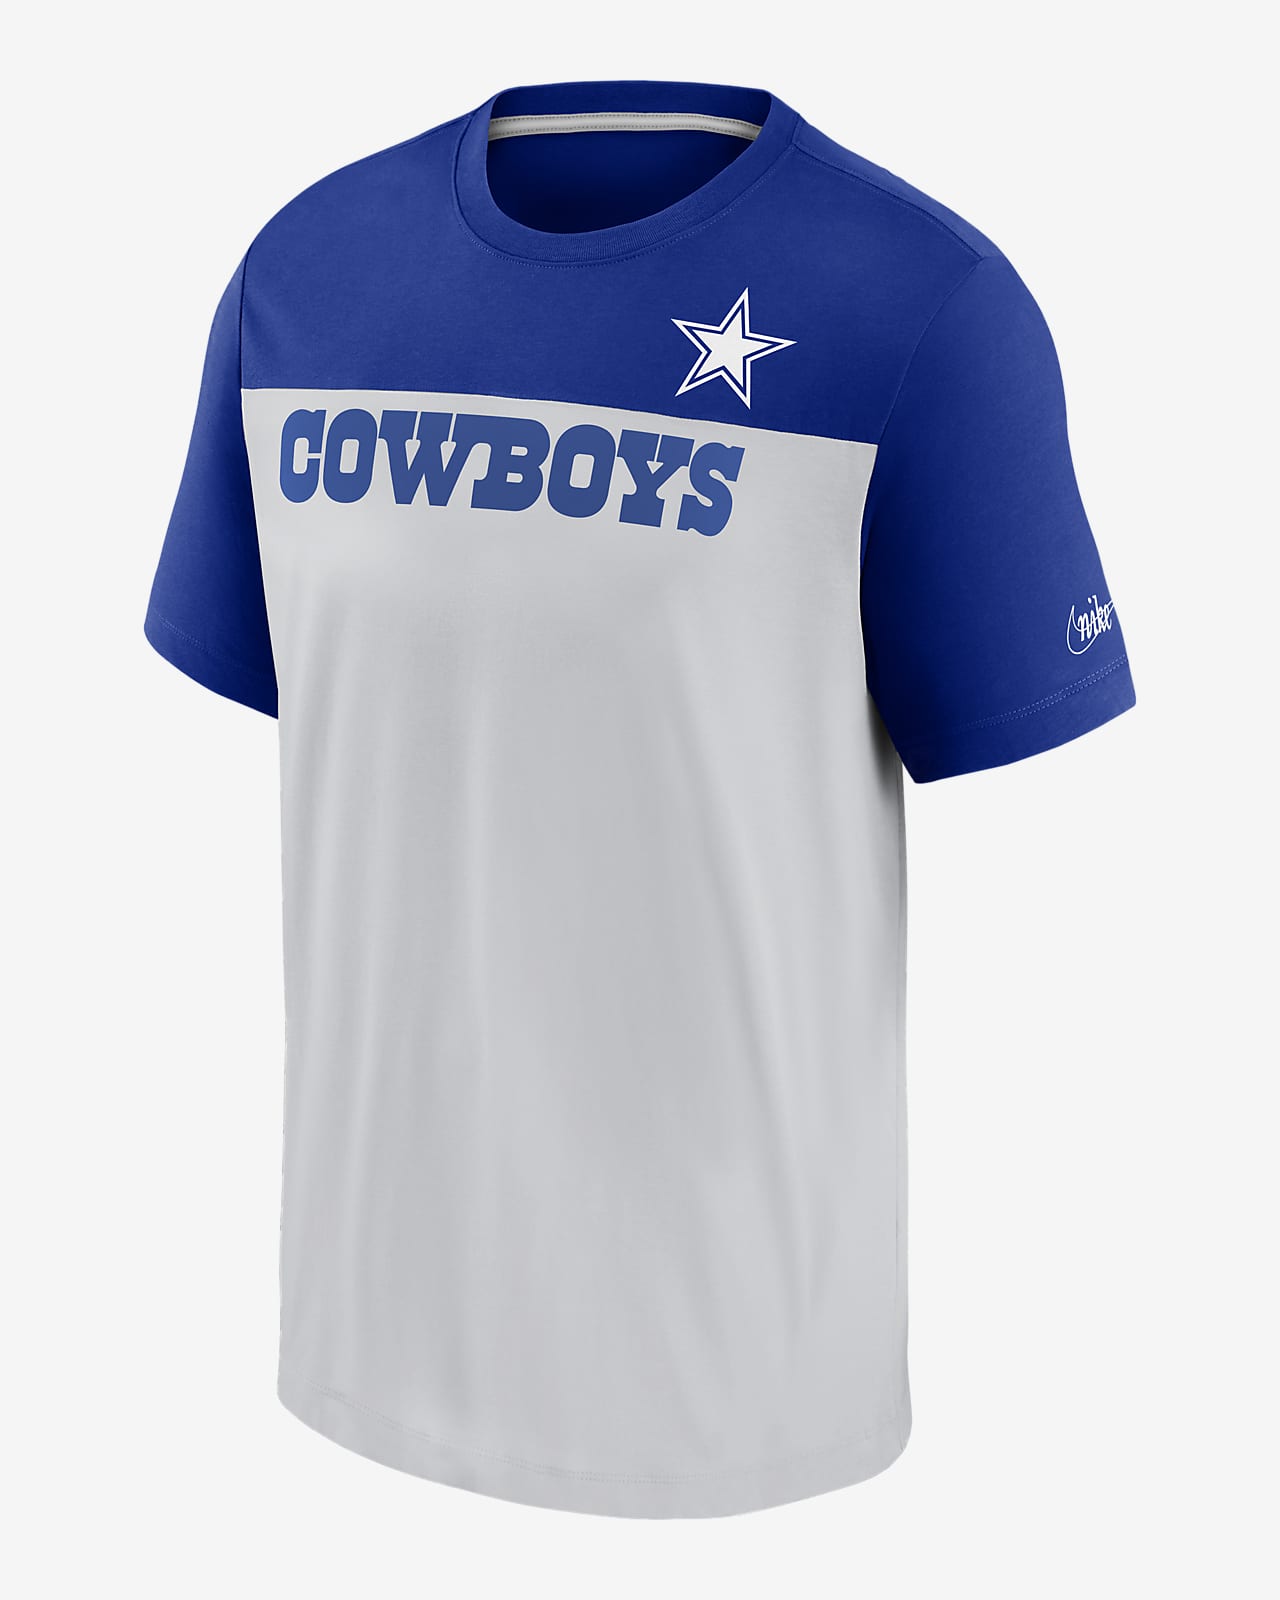 nike cowboys shirt online -